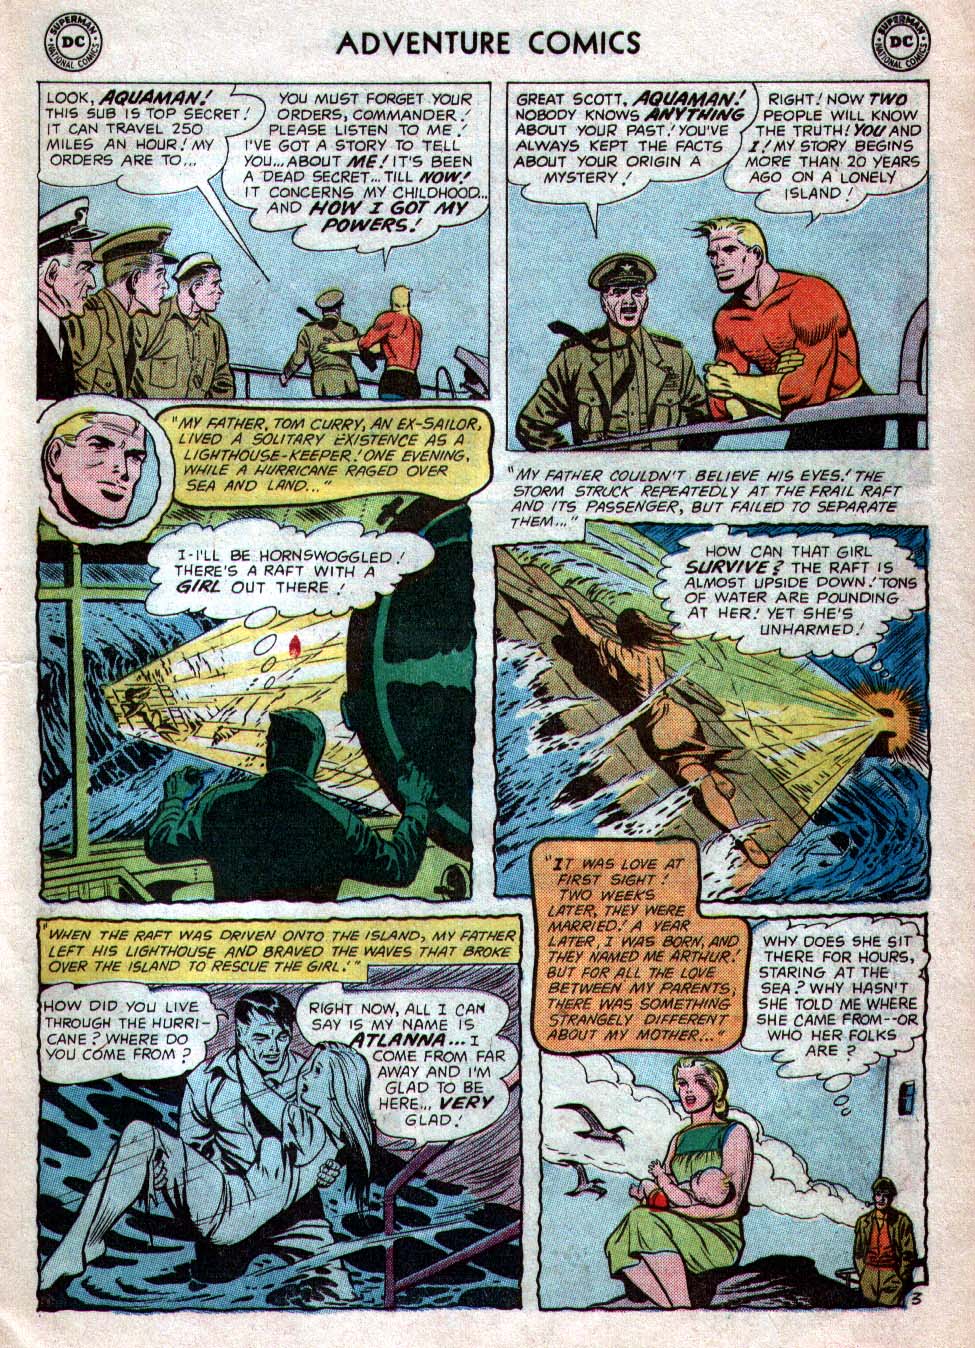 ADVENTURE COMICS #260 - "How Aquaman Got His Powers", by Robert Bernstein and Ramona Fradon